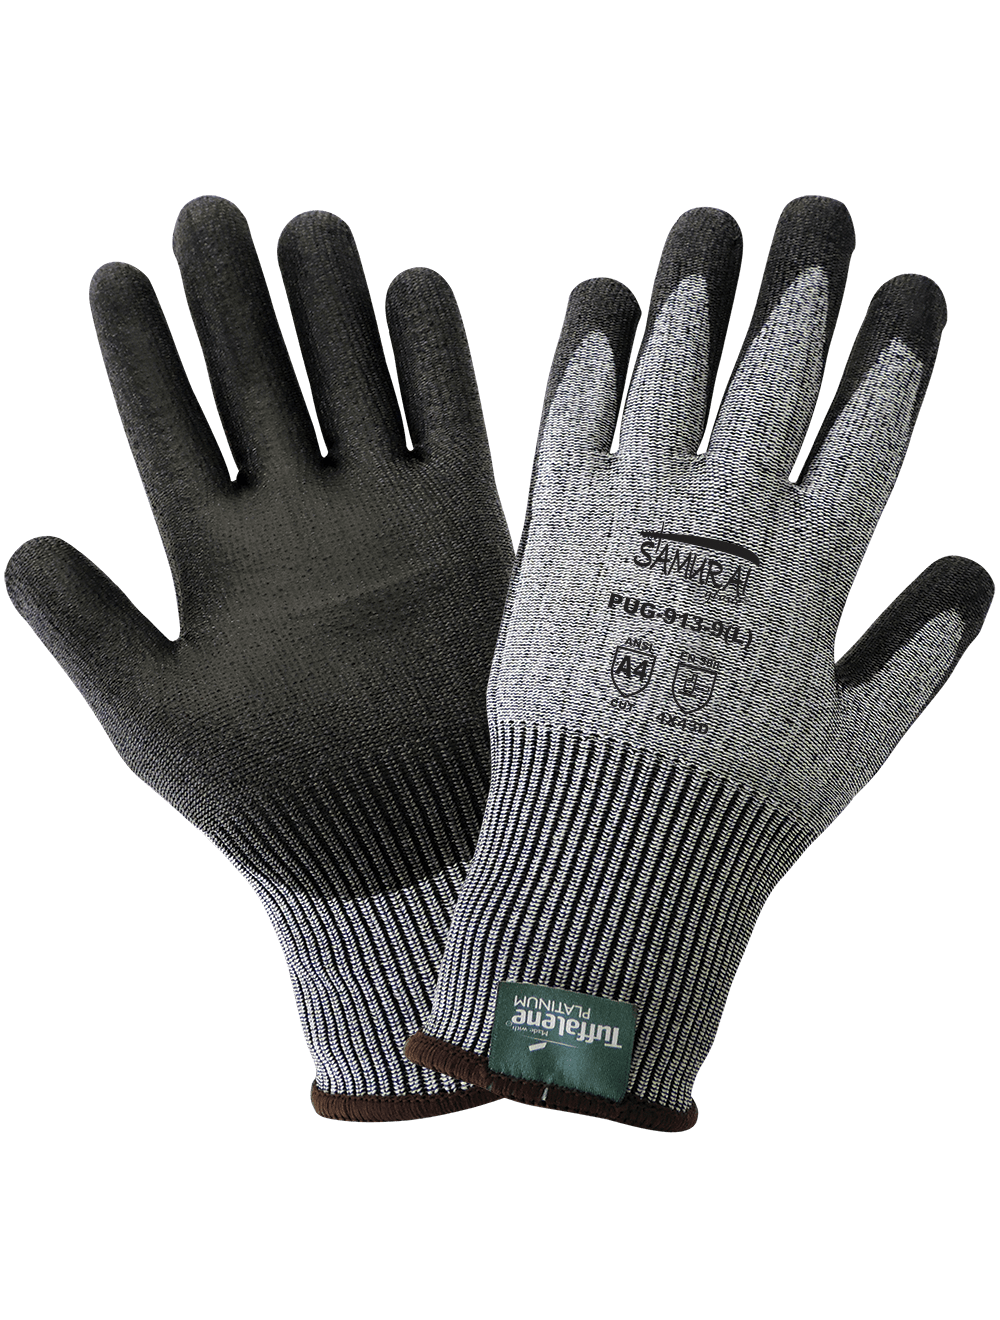 Samurai Glove® Cut Resistant, Salt-and-Pepper 13-Gauge Tuffalene® Platinum Polyurethane Coated Gloves - PUG-913